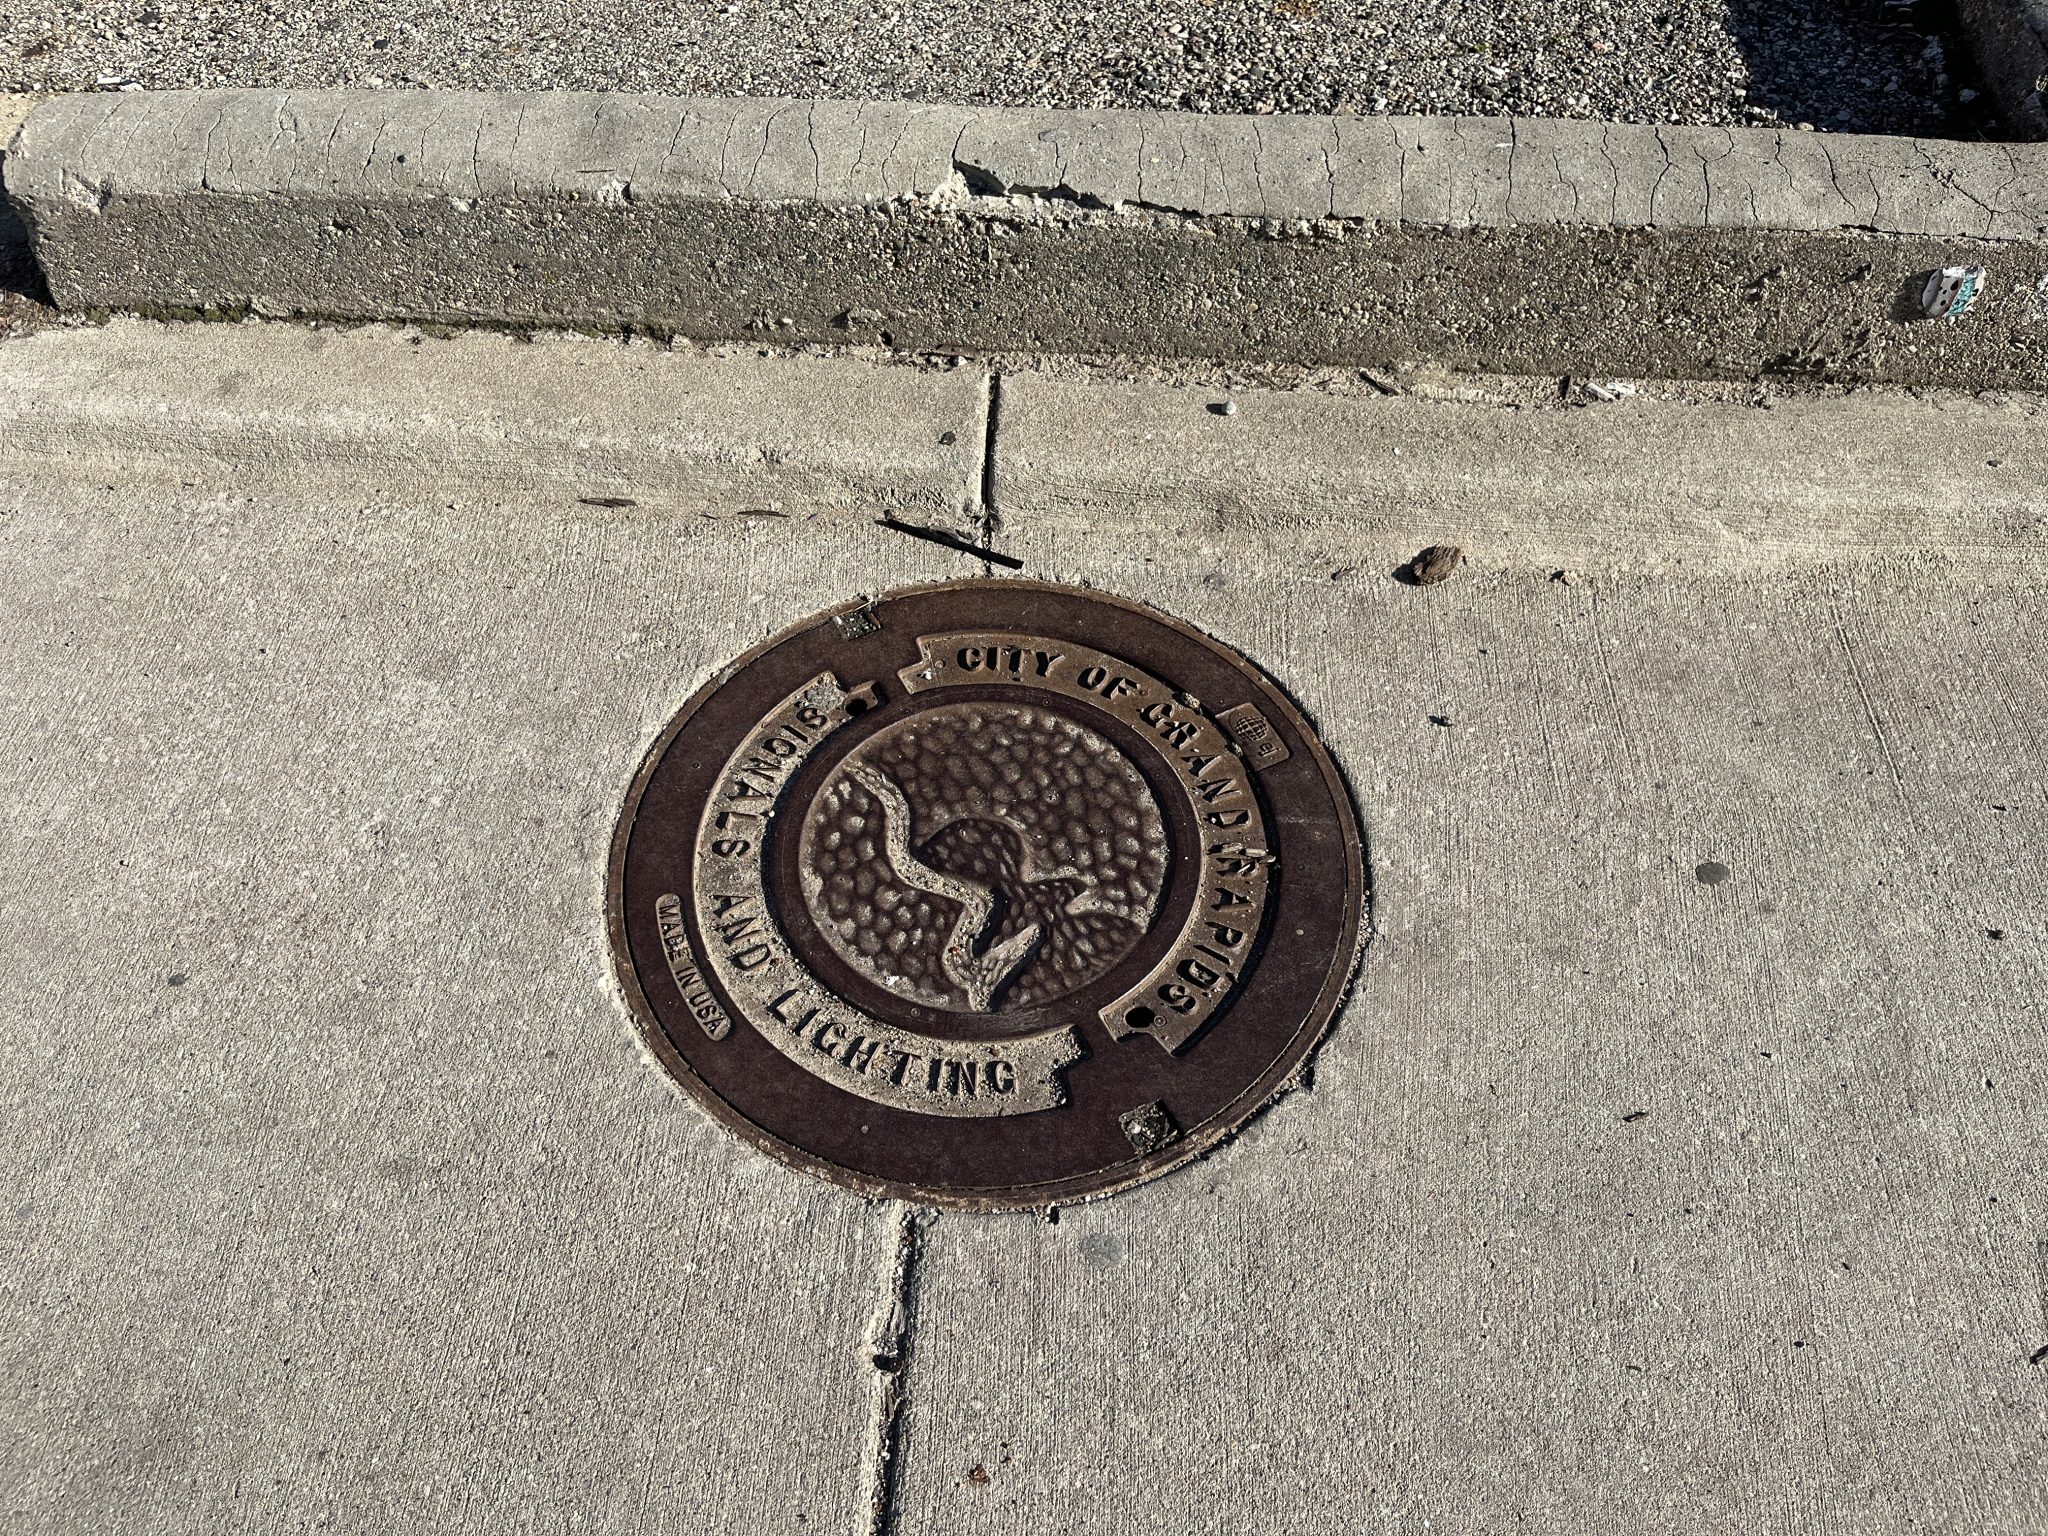 Grand Rapids, Michigan, sewer cover